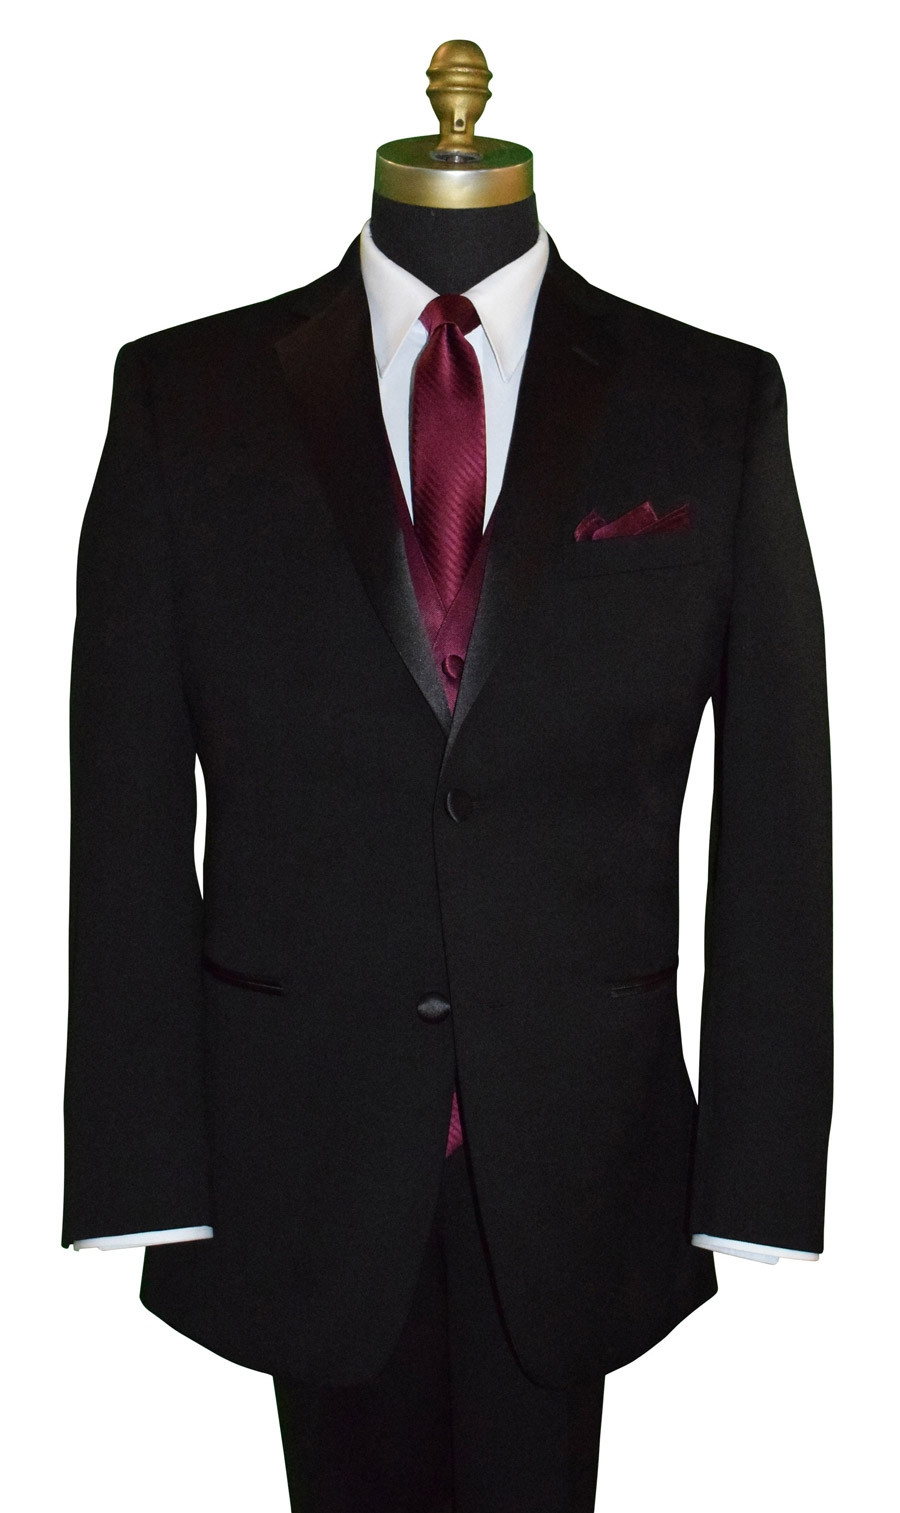 men's wine color long tie with black tuxedo at Tuxbling.com